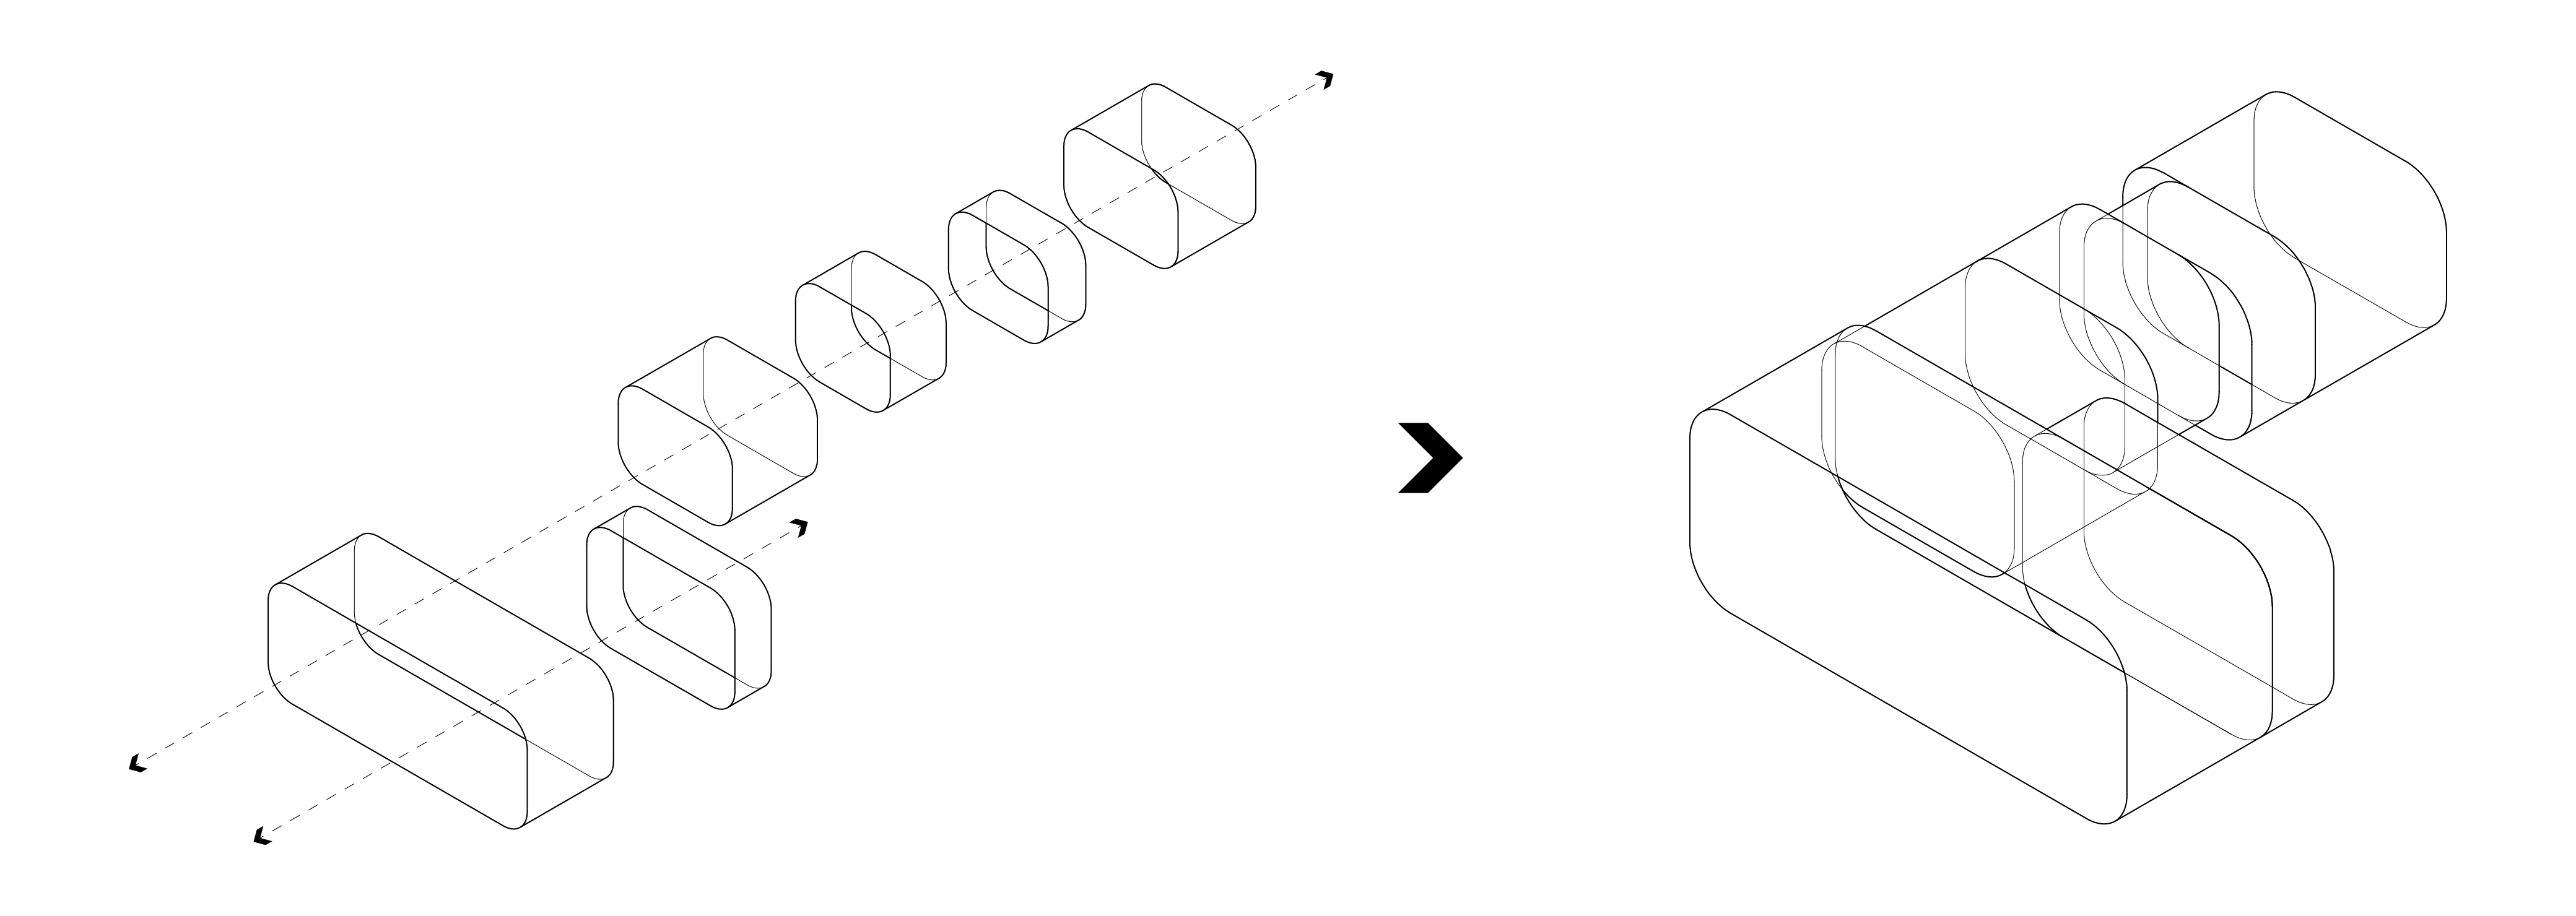 弧角造型的功能单元模块，嵌套组合形成基本空间体系，Arc-angle-shaped functional modules, nested and combined to form a basic space system.jpg